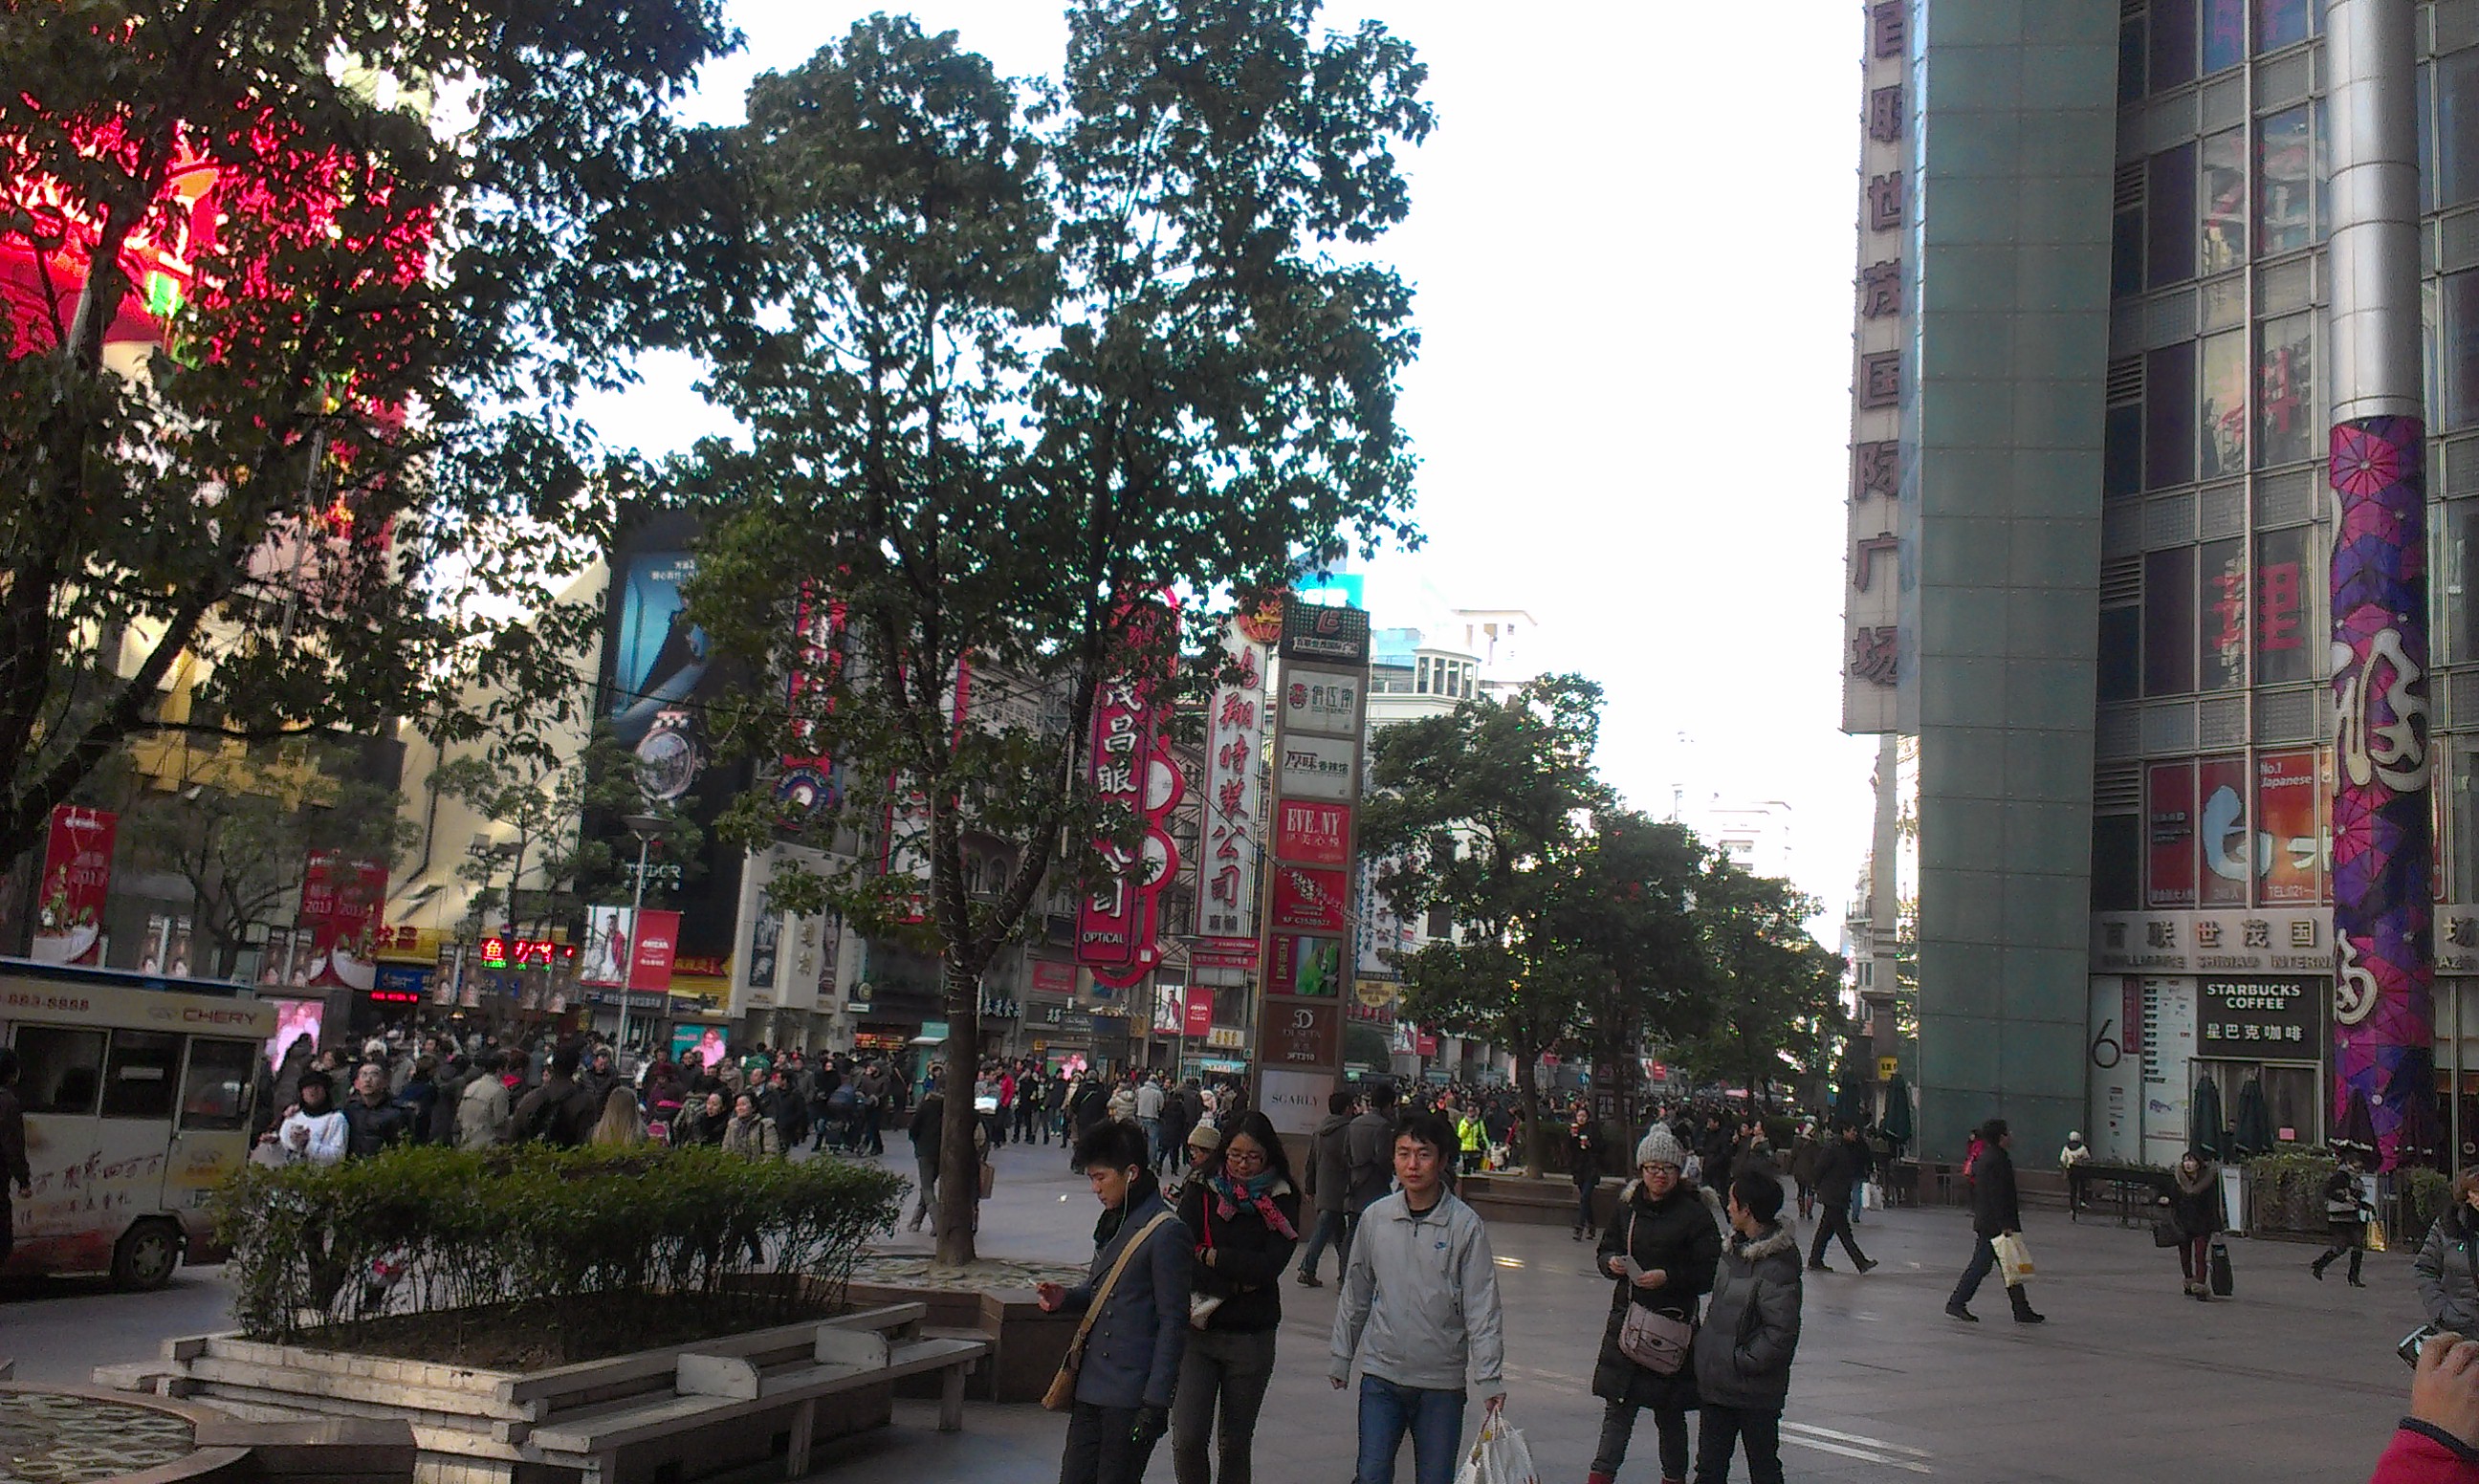 Nanjing Road 1